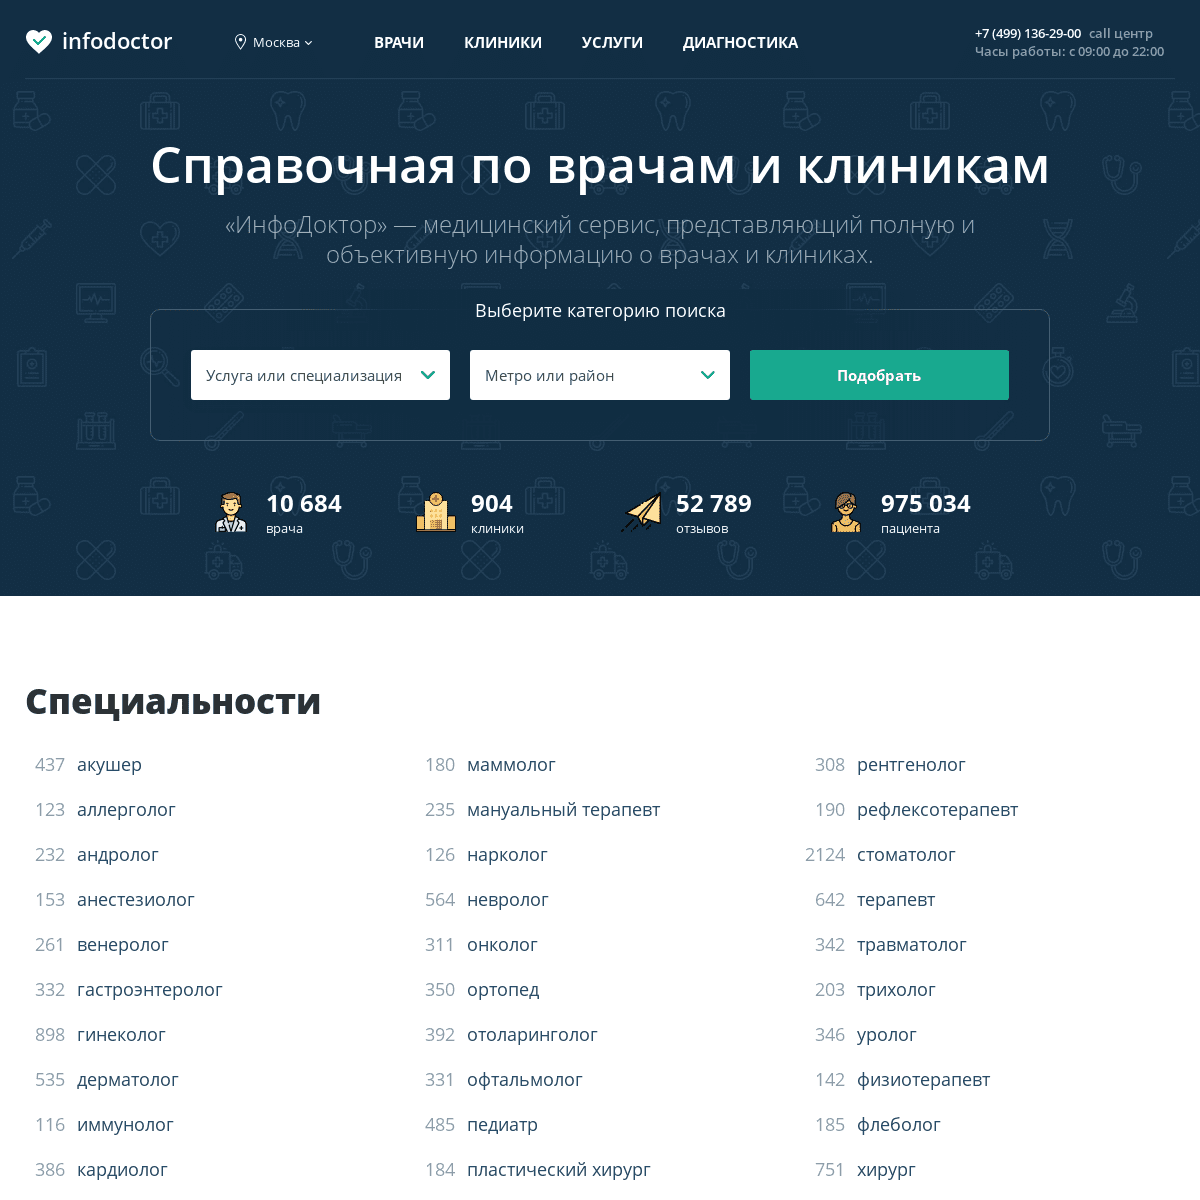 A complete backup of https://infodoctor.ru